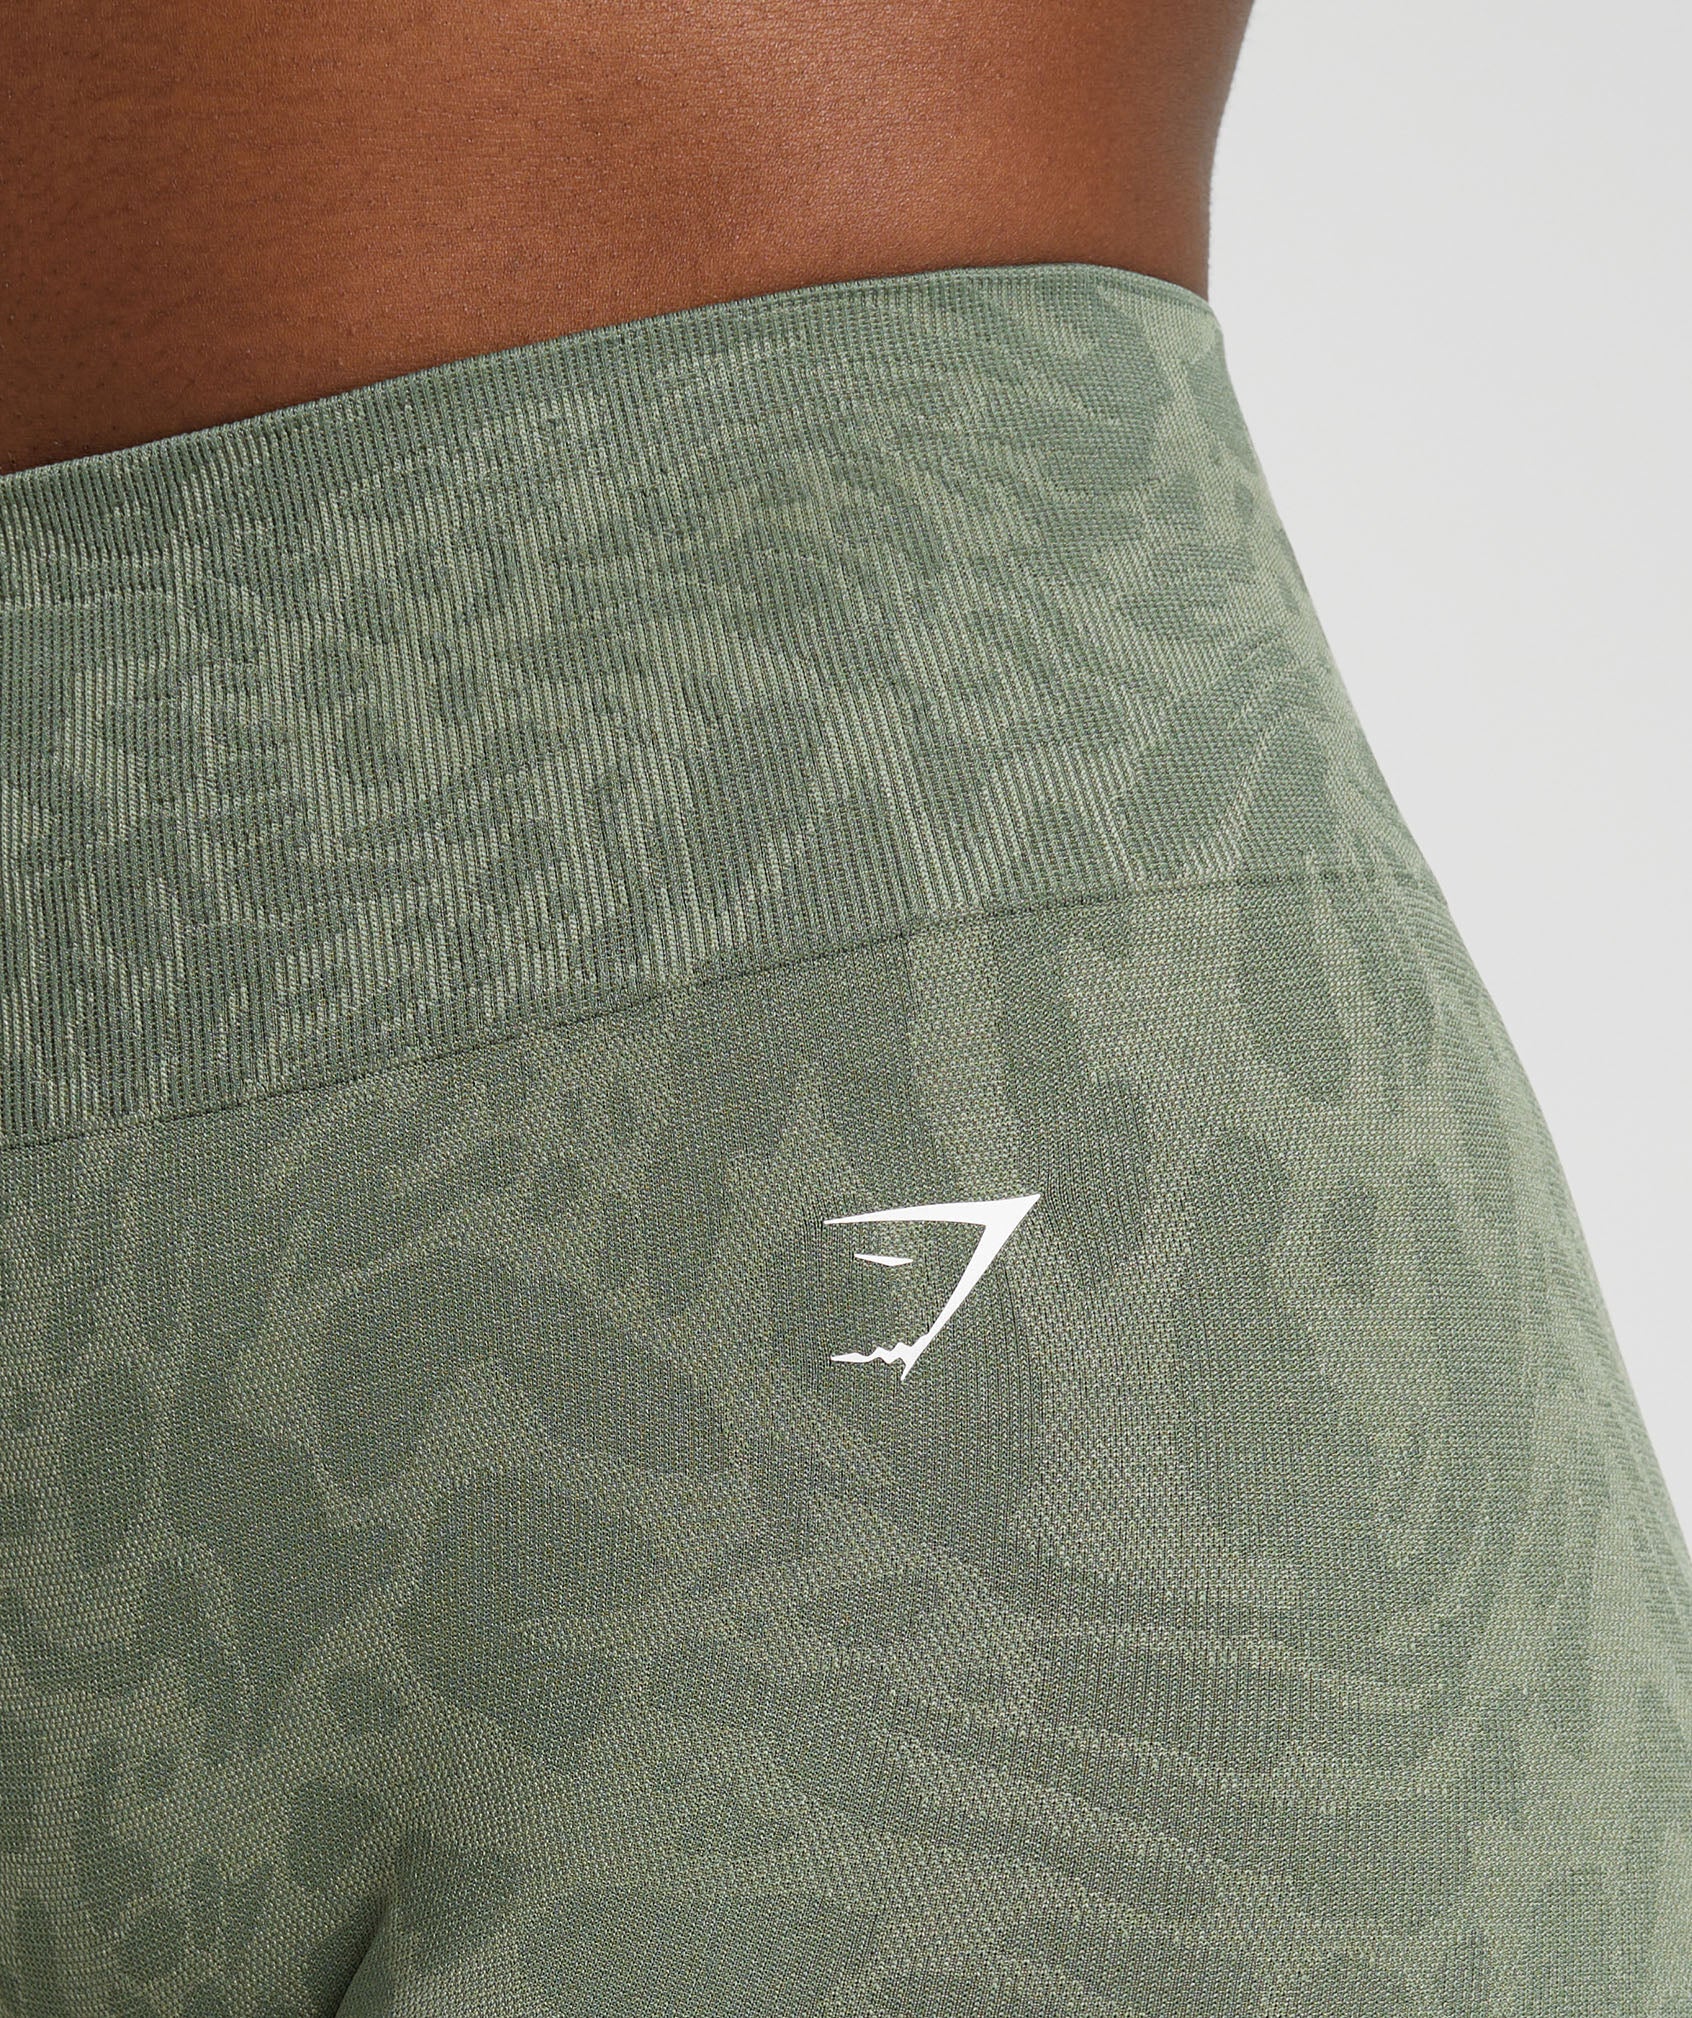 Adapt Safari Tight Shorts in Force Green/Faded Green - view 5